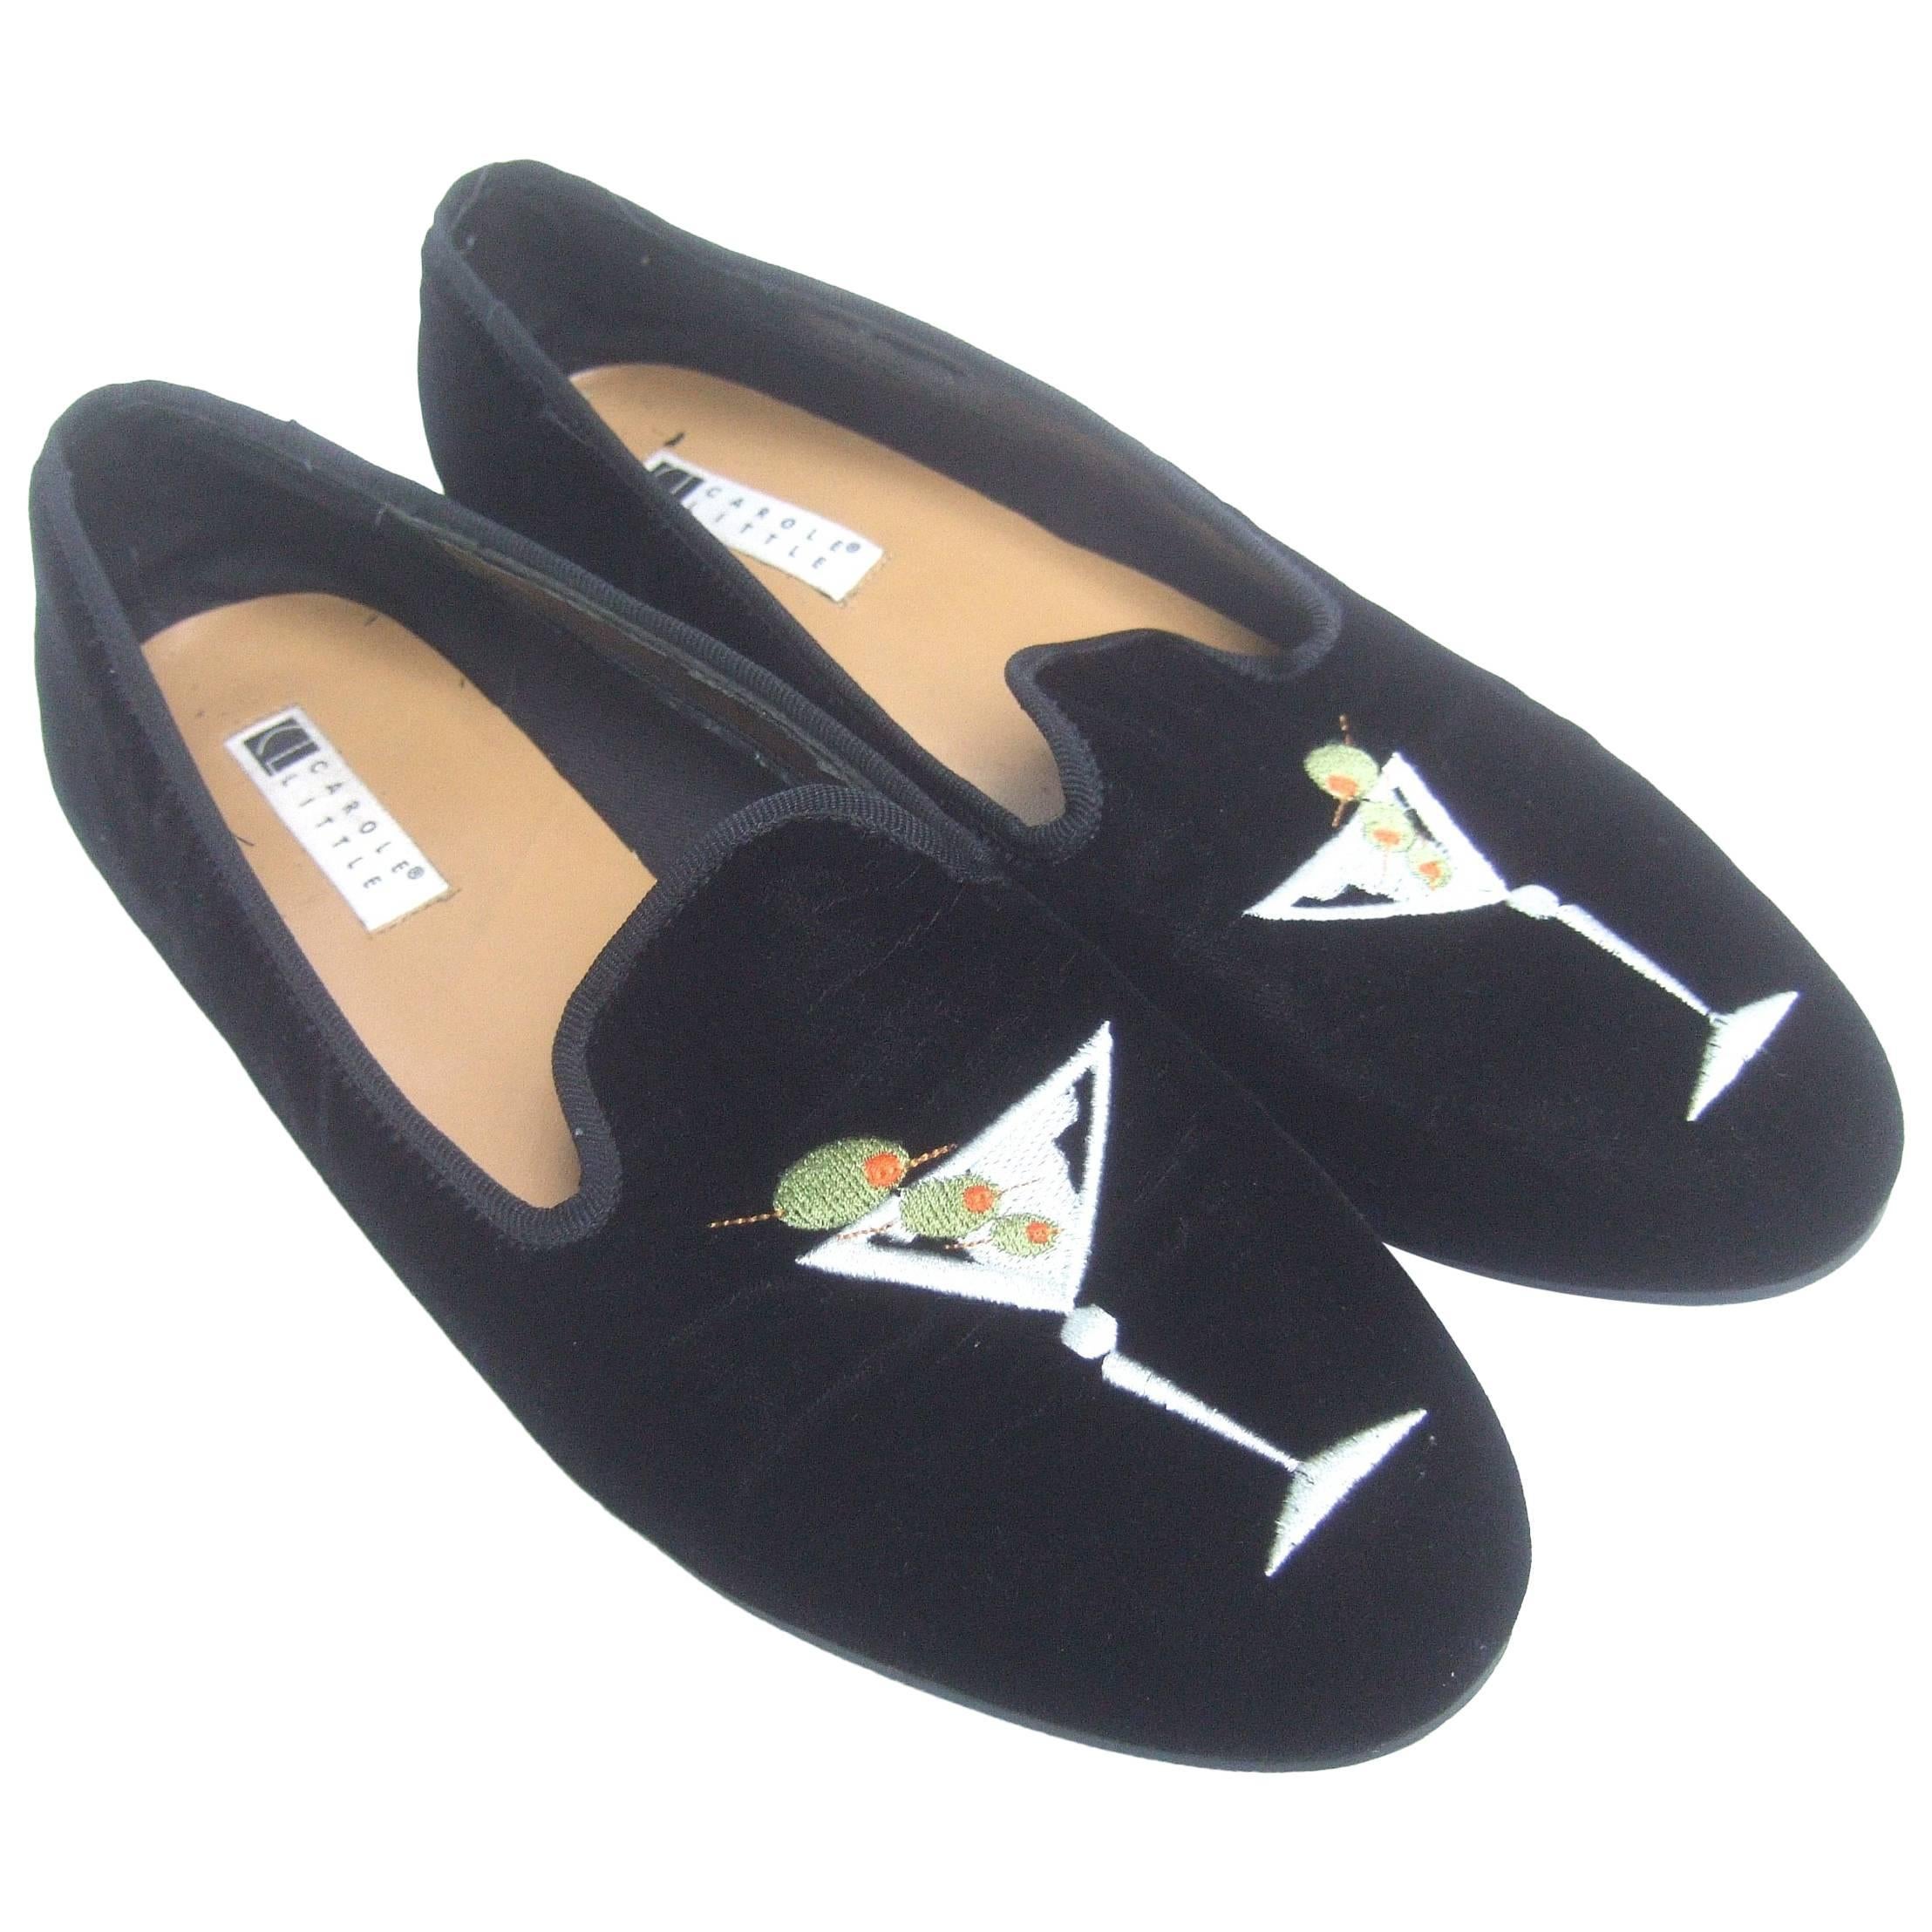 Black Velvet Embroidered Womens' Martini Glass Slipper Shoes US Size 10 M